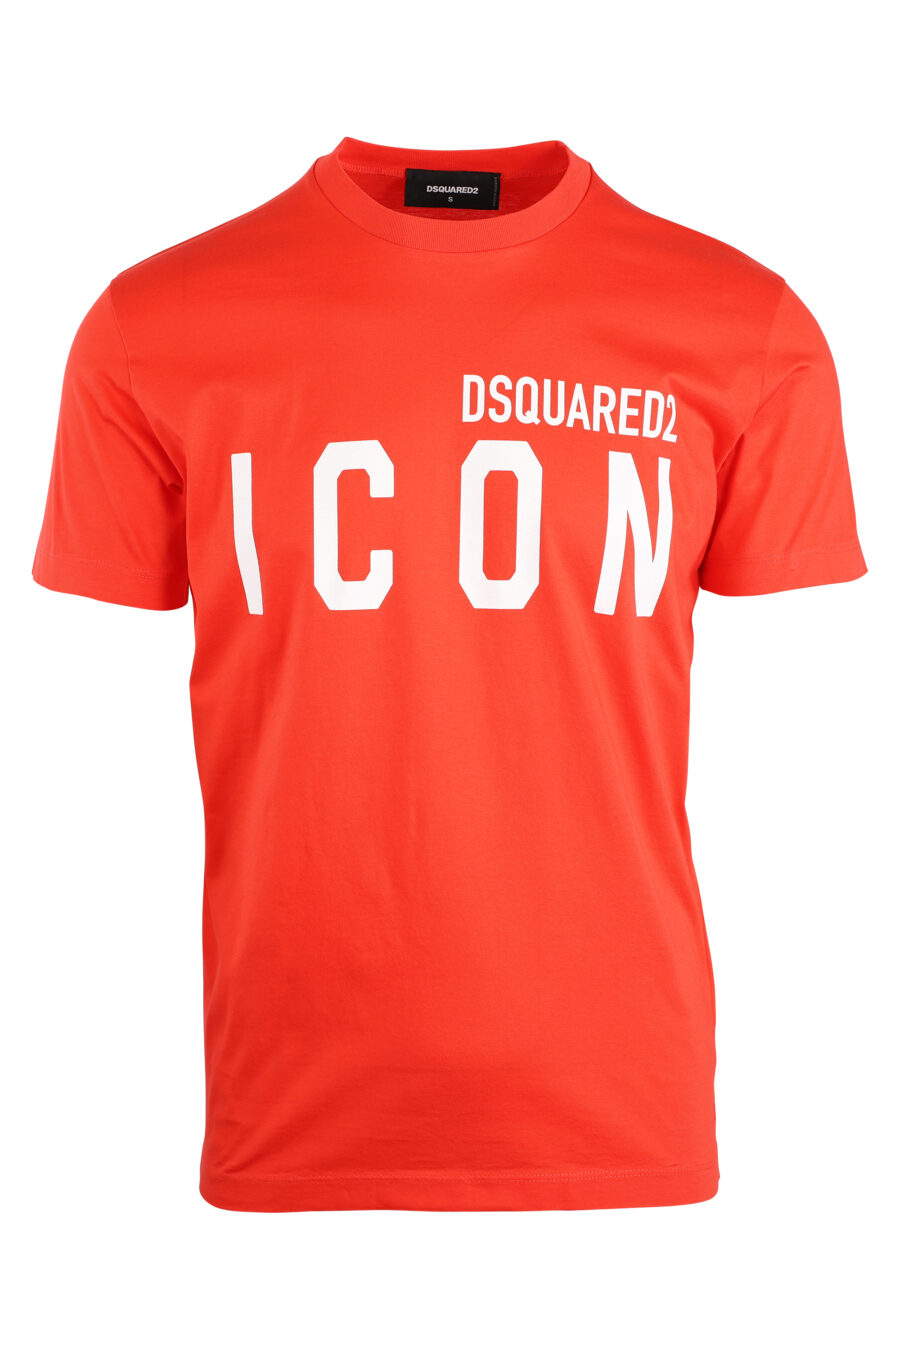 T-shirt laranja com logótipo duplo "ícone" - IMG 8927